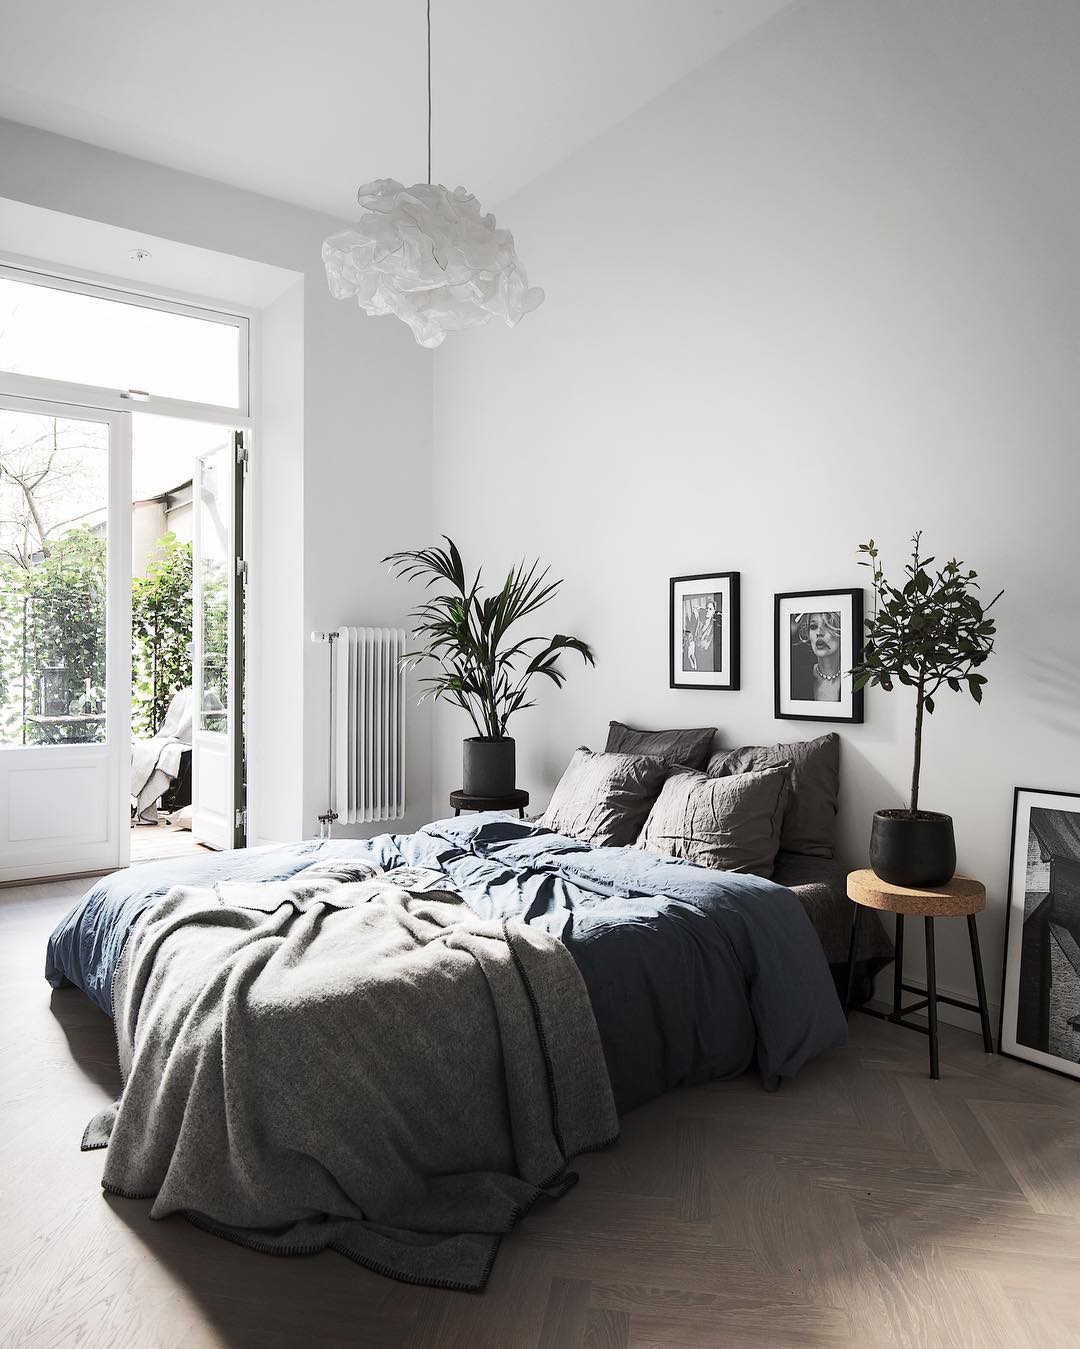 Gray bedroom with dark gray bed. Photo by Instagram user @kronfoto